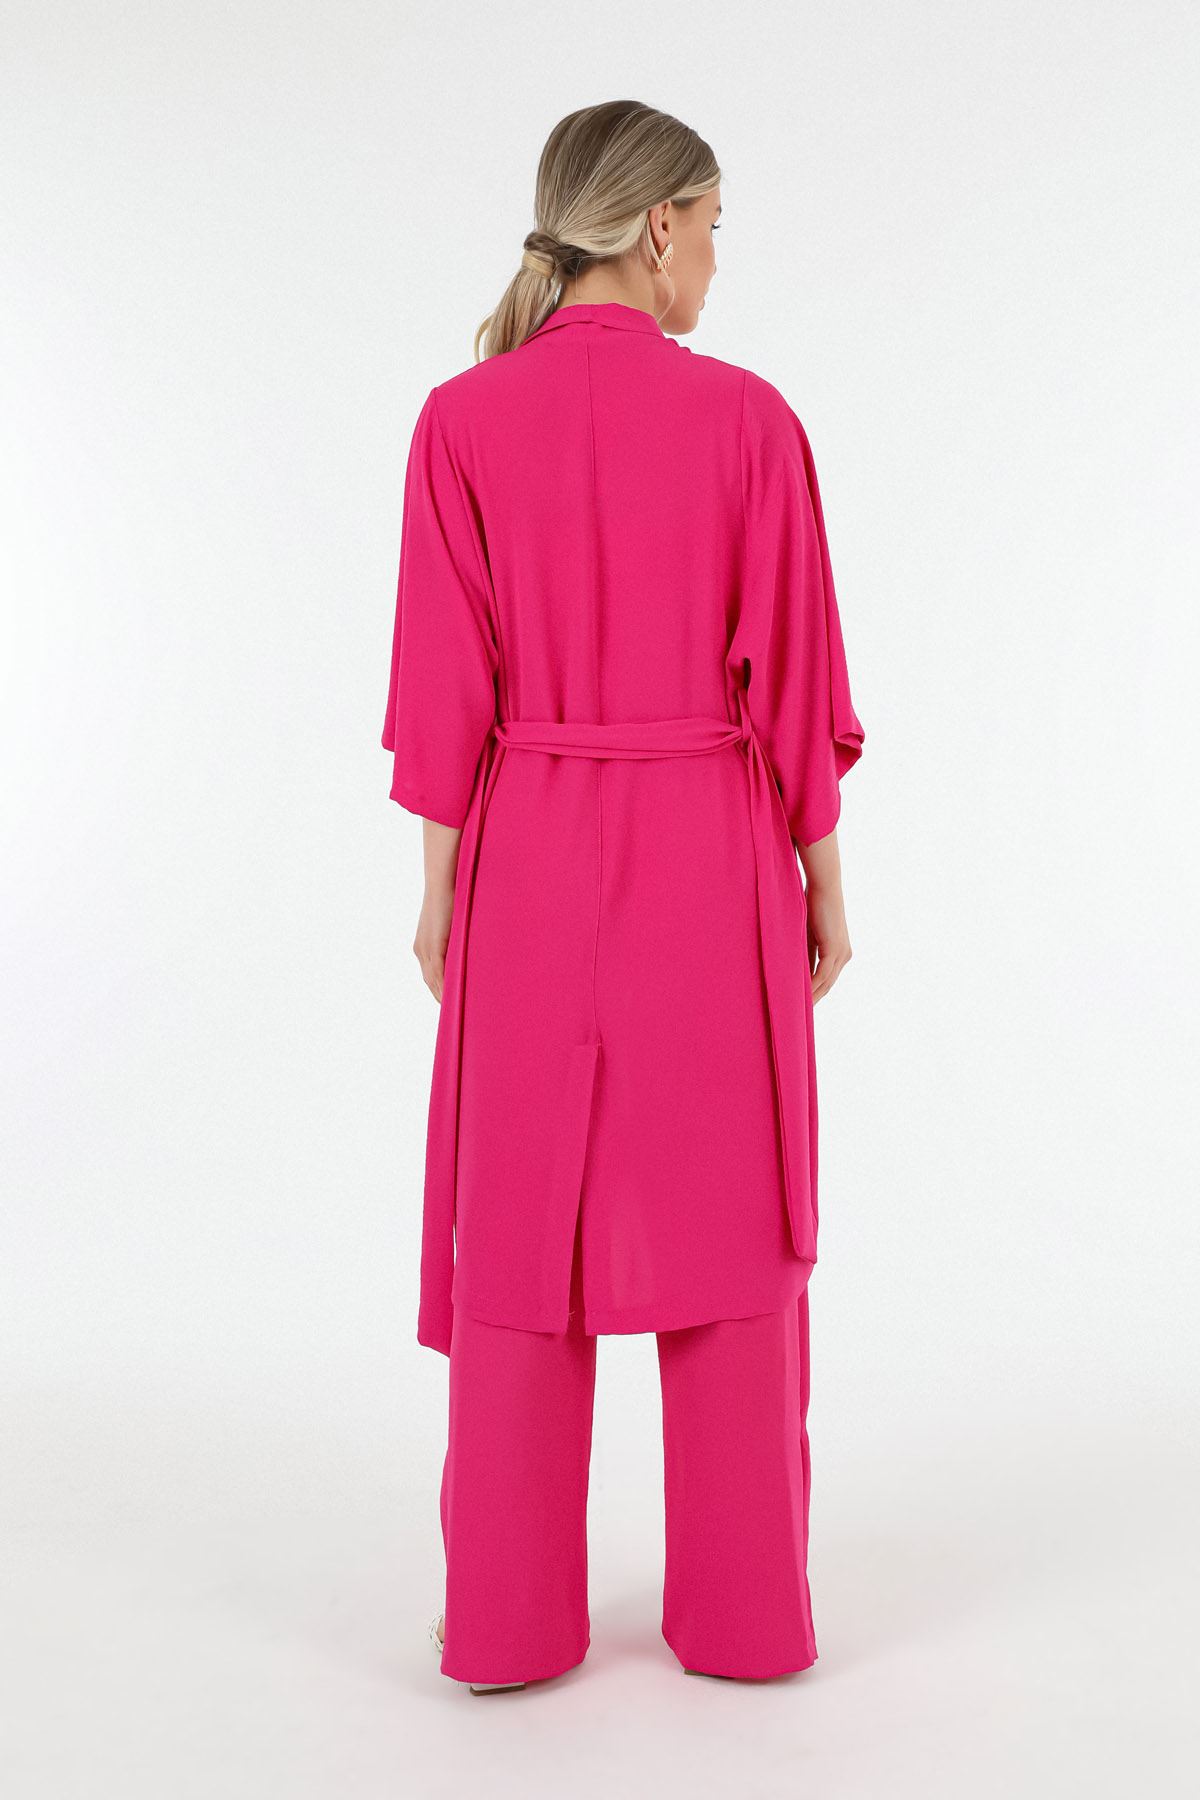 Linen Fabric Long Sleeve Revere Collar Hip Height Comfy Women Jacket-Fuchia